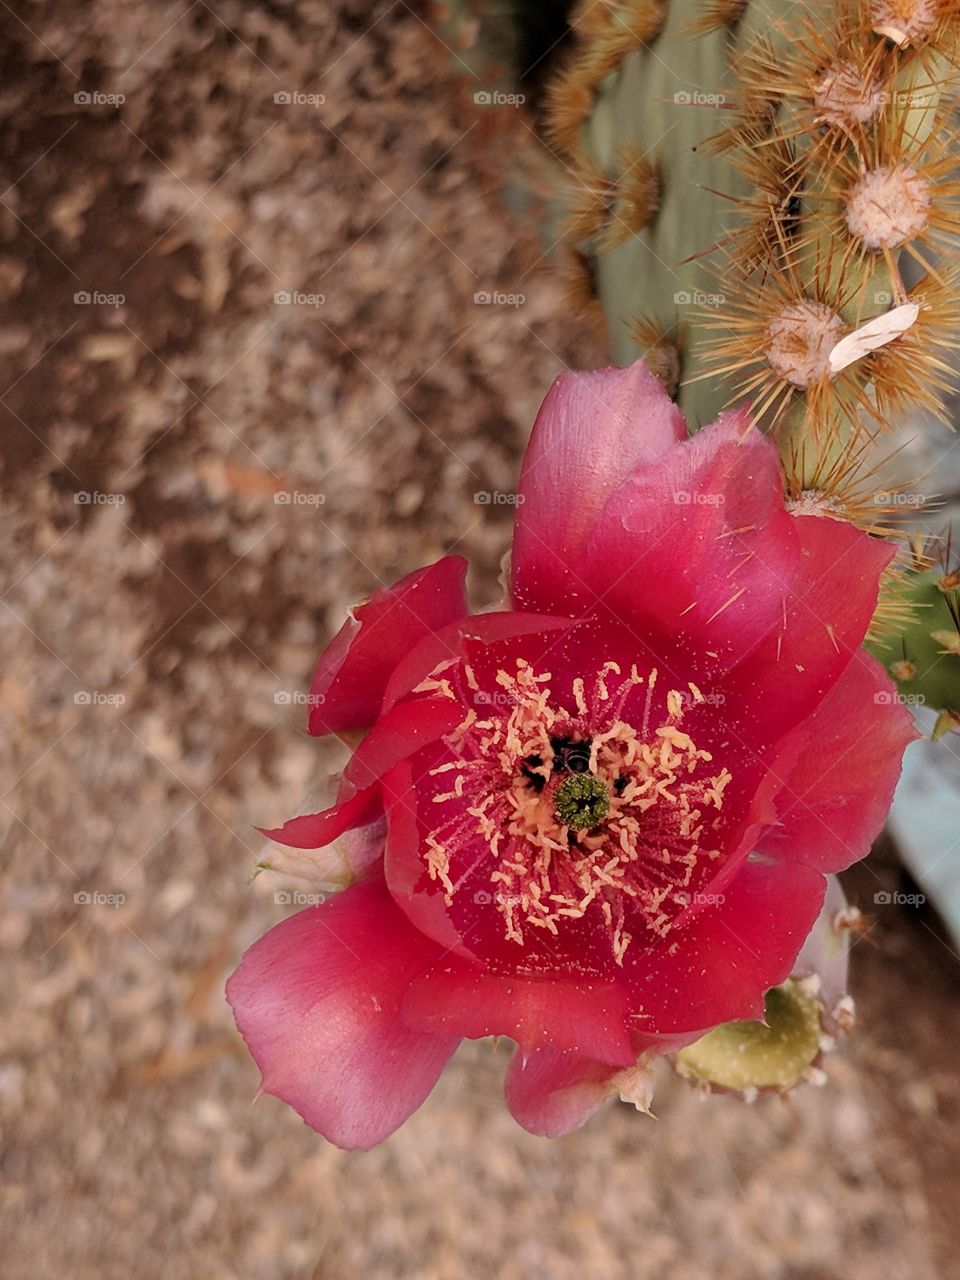 flower on cactus